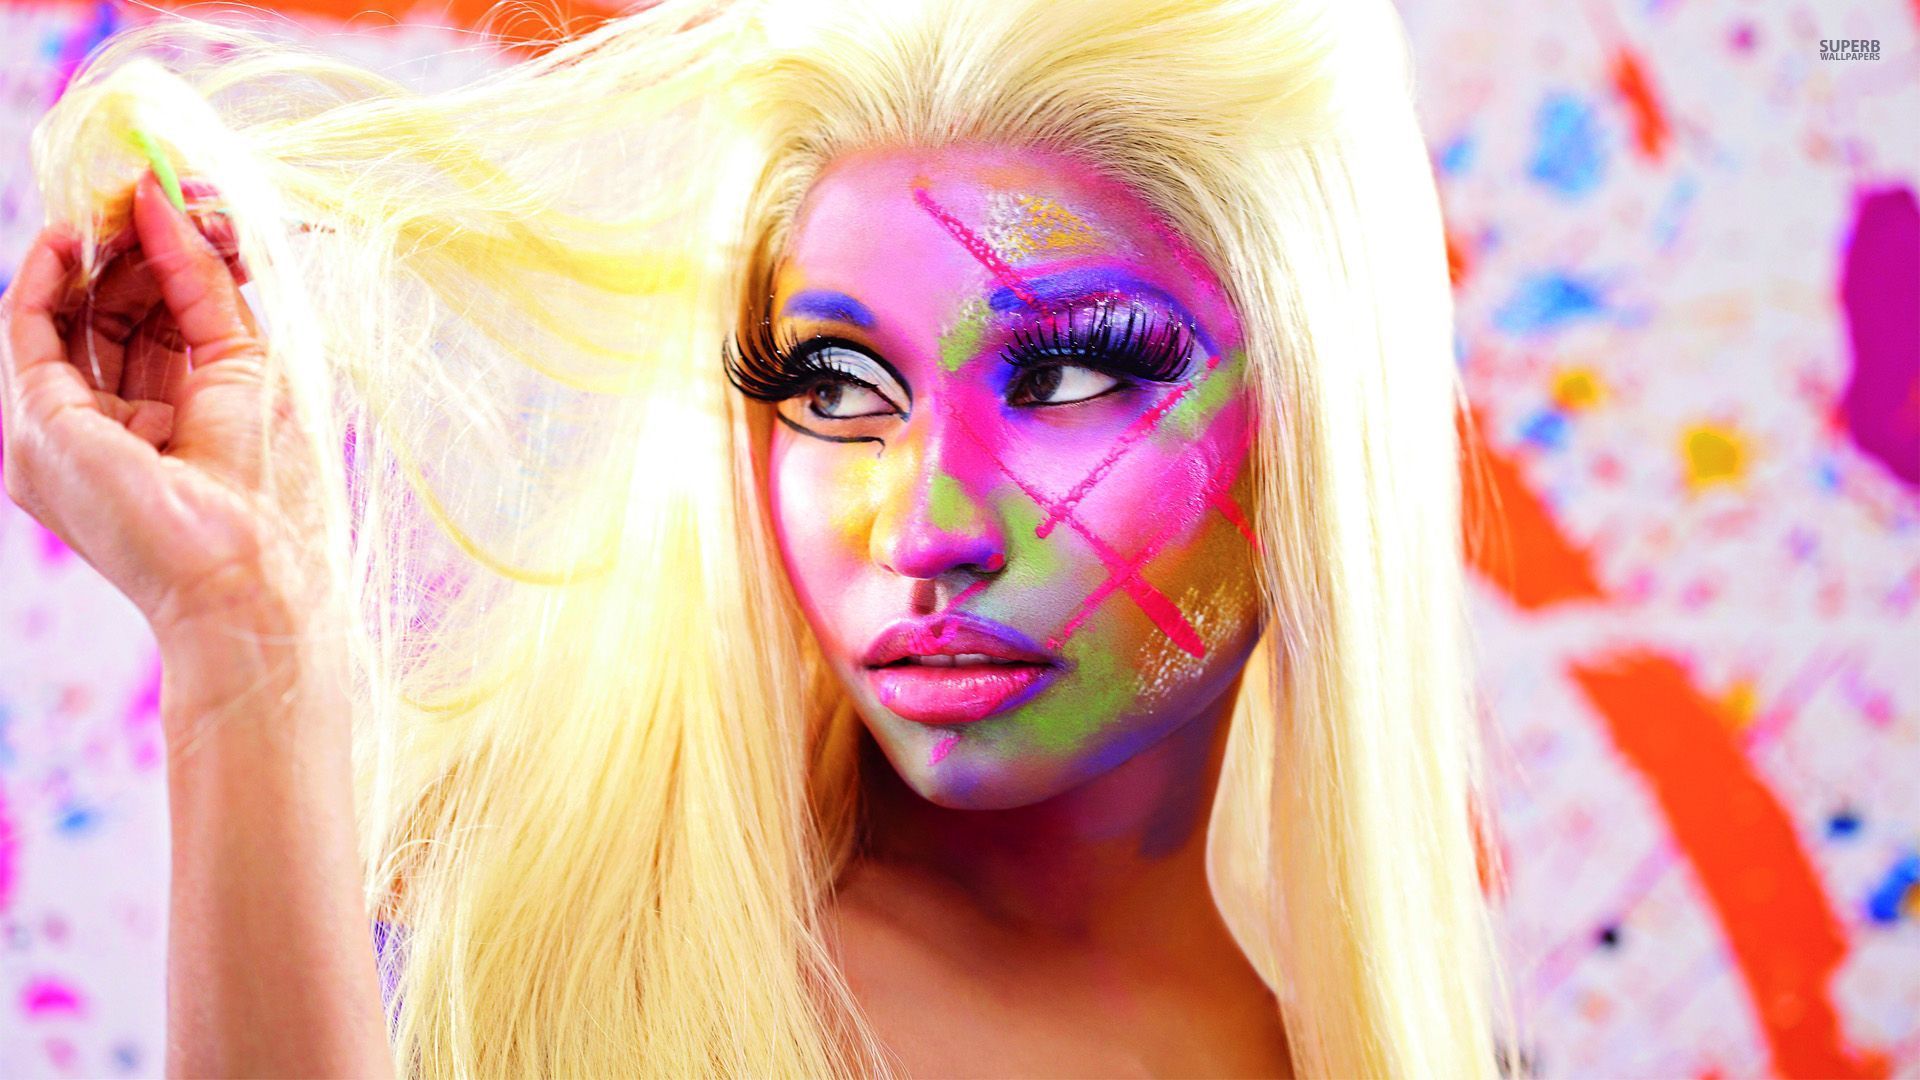 Nicki Minaj Wallpapers High Resolution and Quality Download